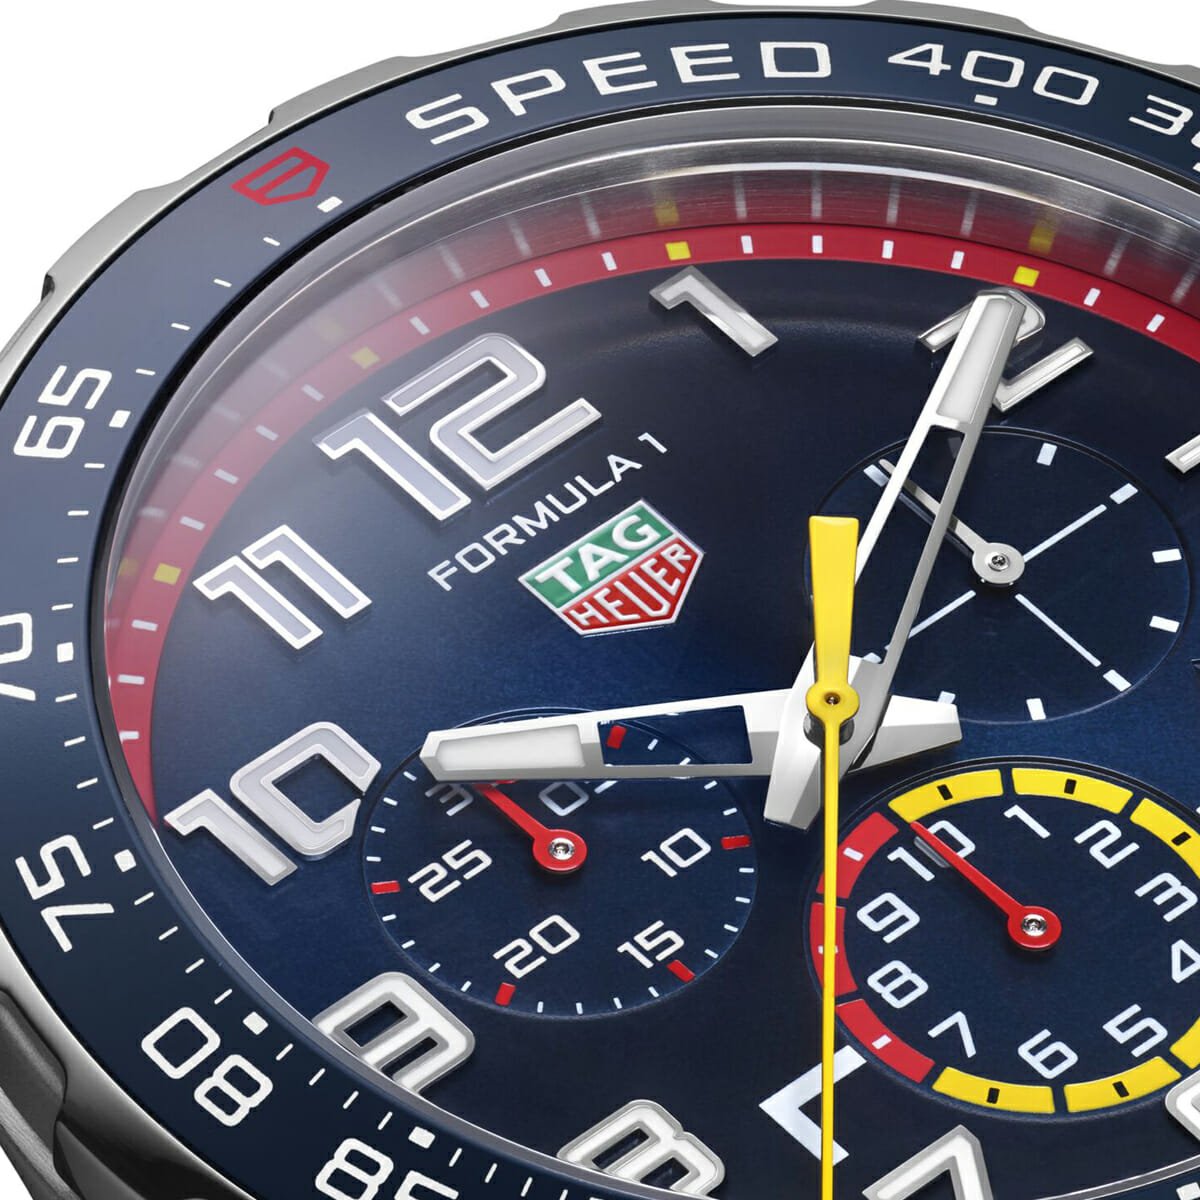 Formula 1 x Red Bull Racing Quartz 43mm Watch